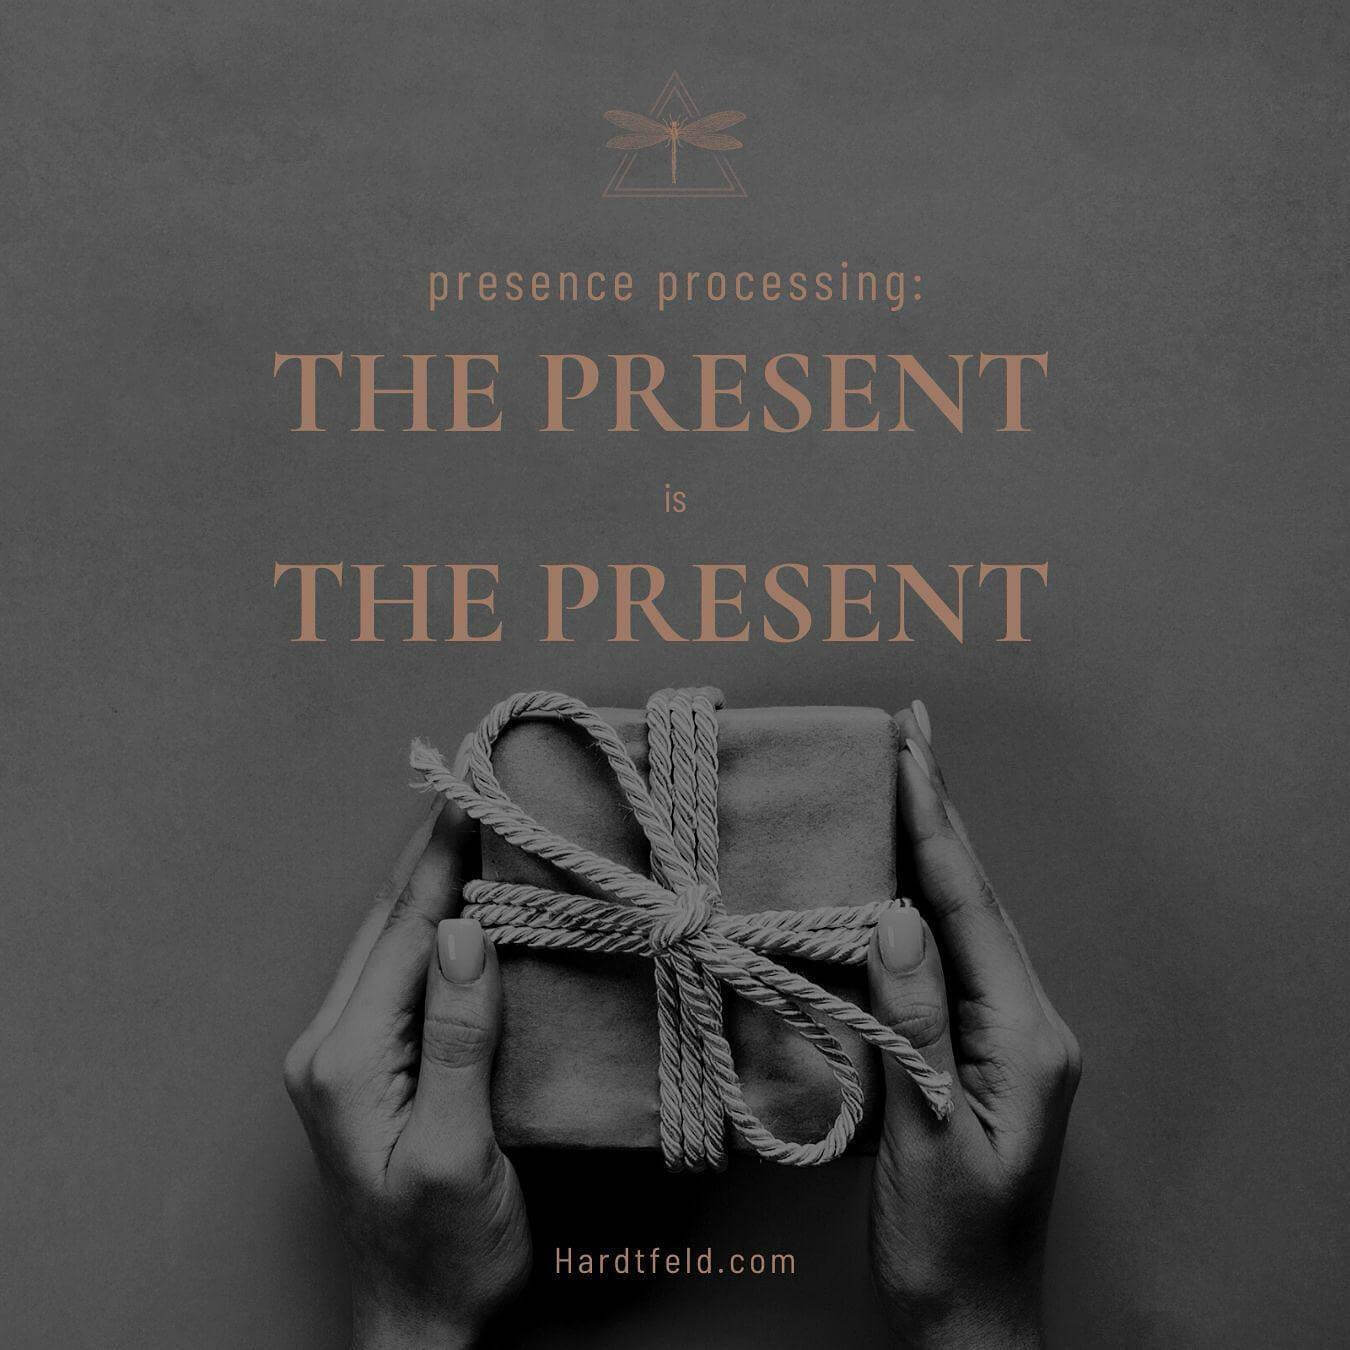 Hardtfeld: Presence is the present